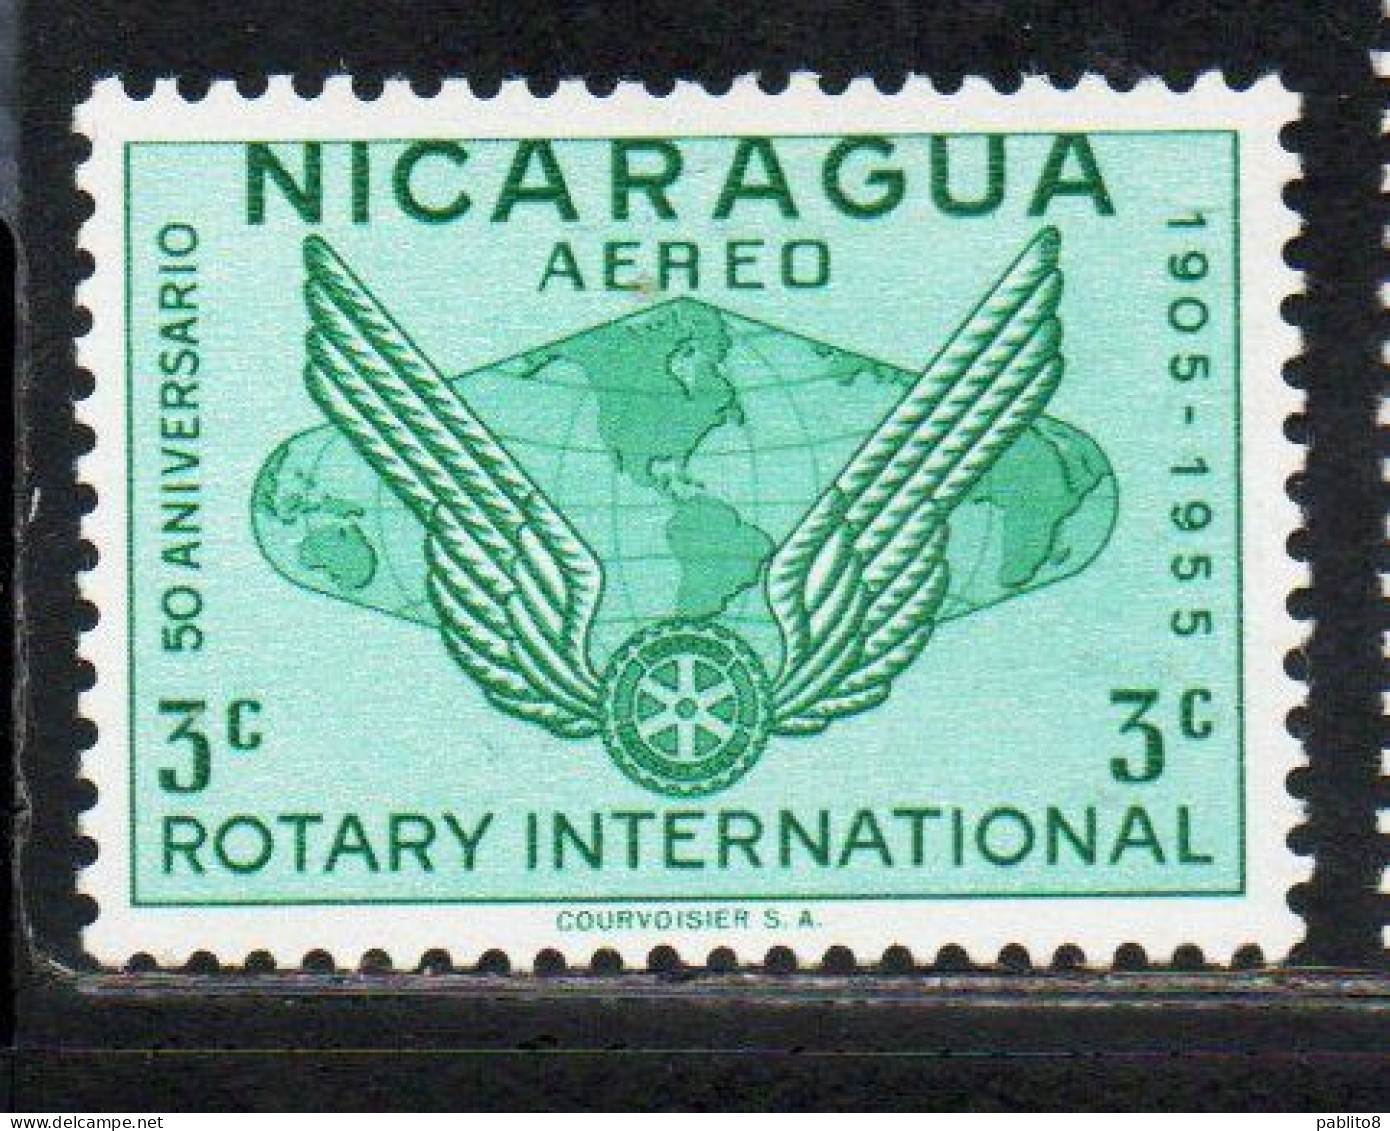 NICARAGUA 195 ROTARY INTERNATIONAL HANDCLASP EMBLEM MAP OF WORLD 3c MH - Nicaragua